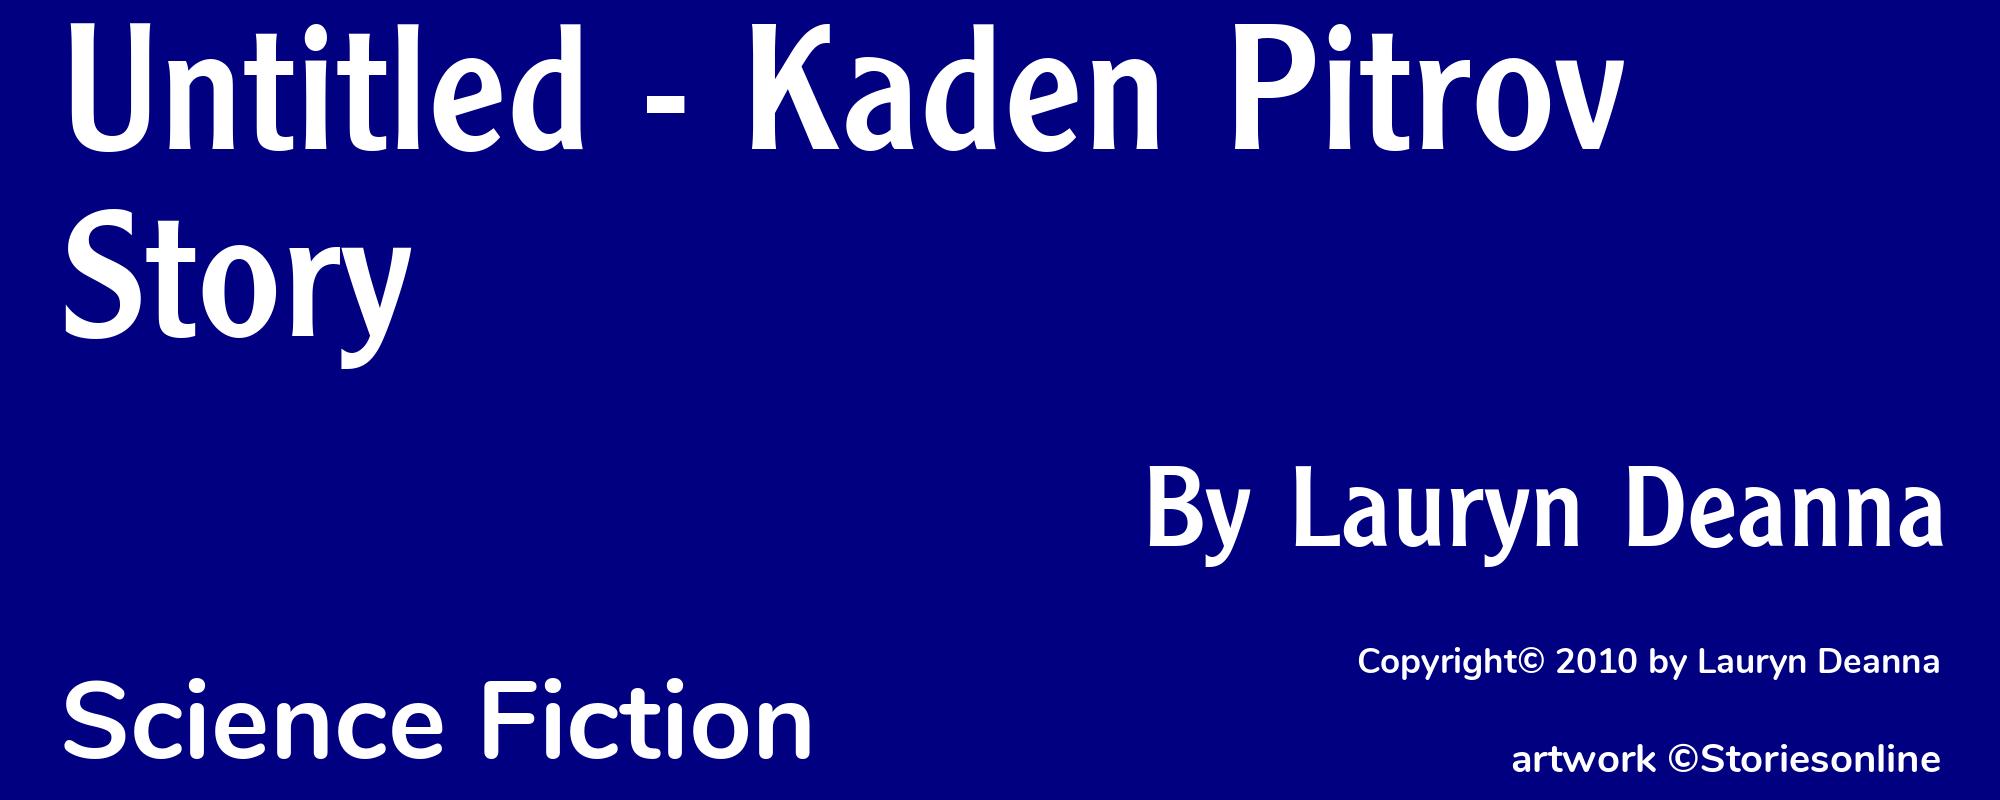 Untitled - Kaden Pitrov Story - Cover